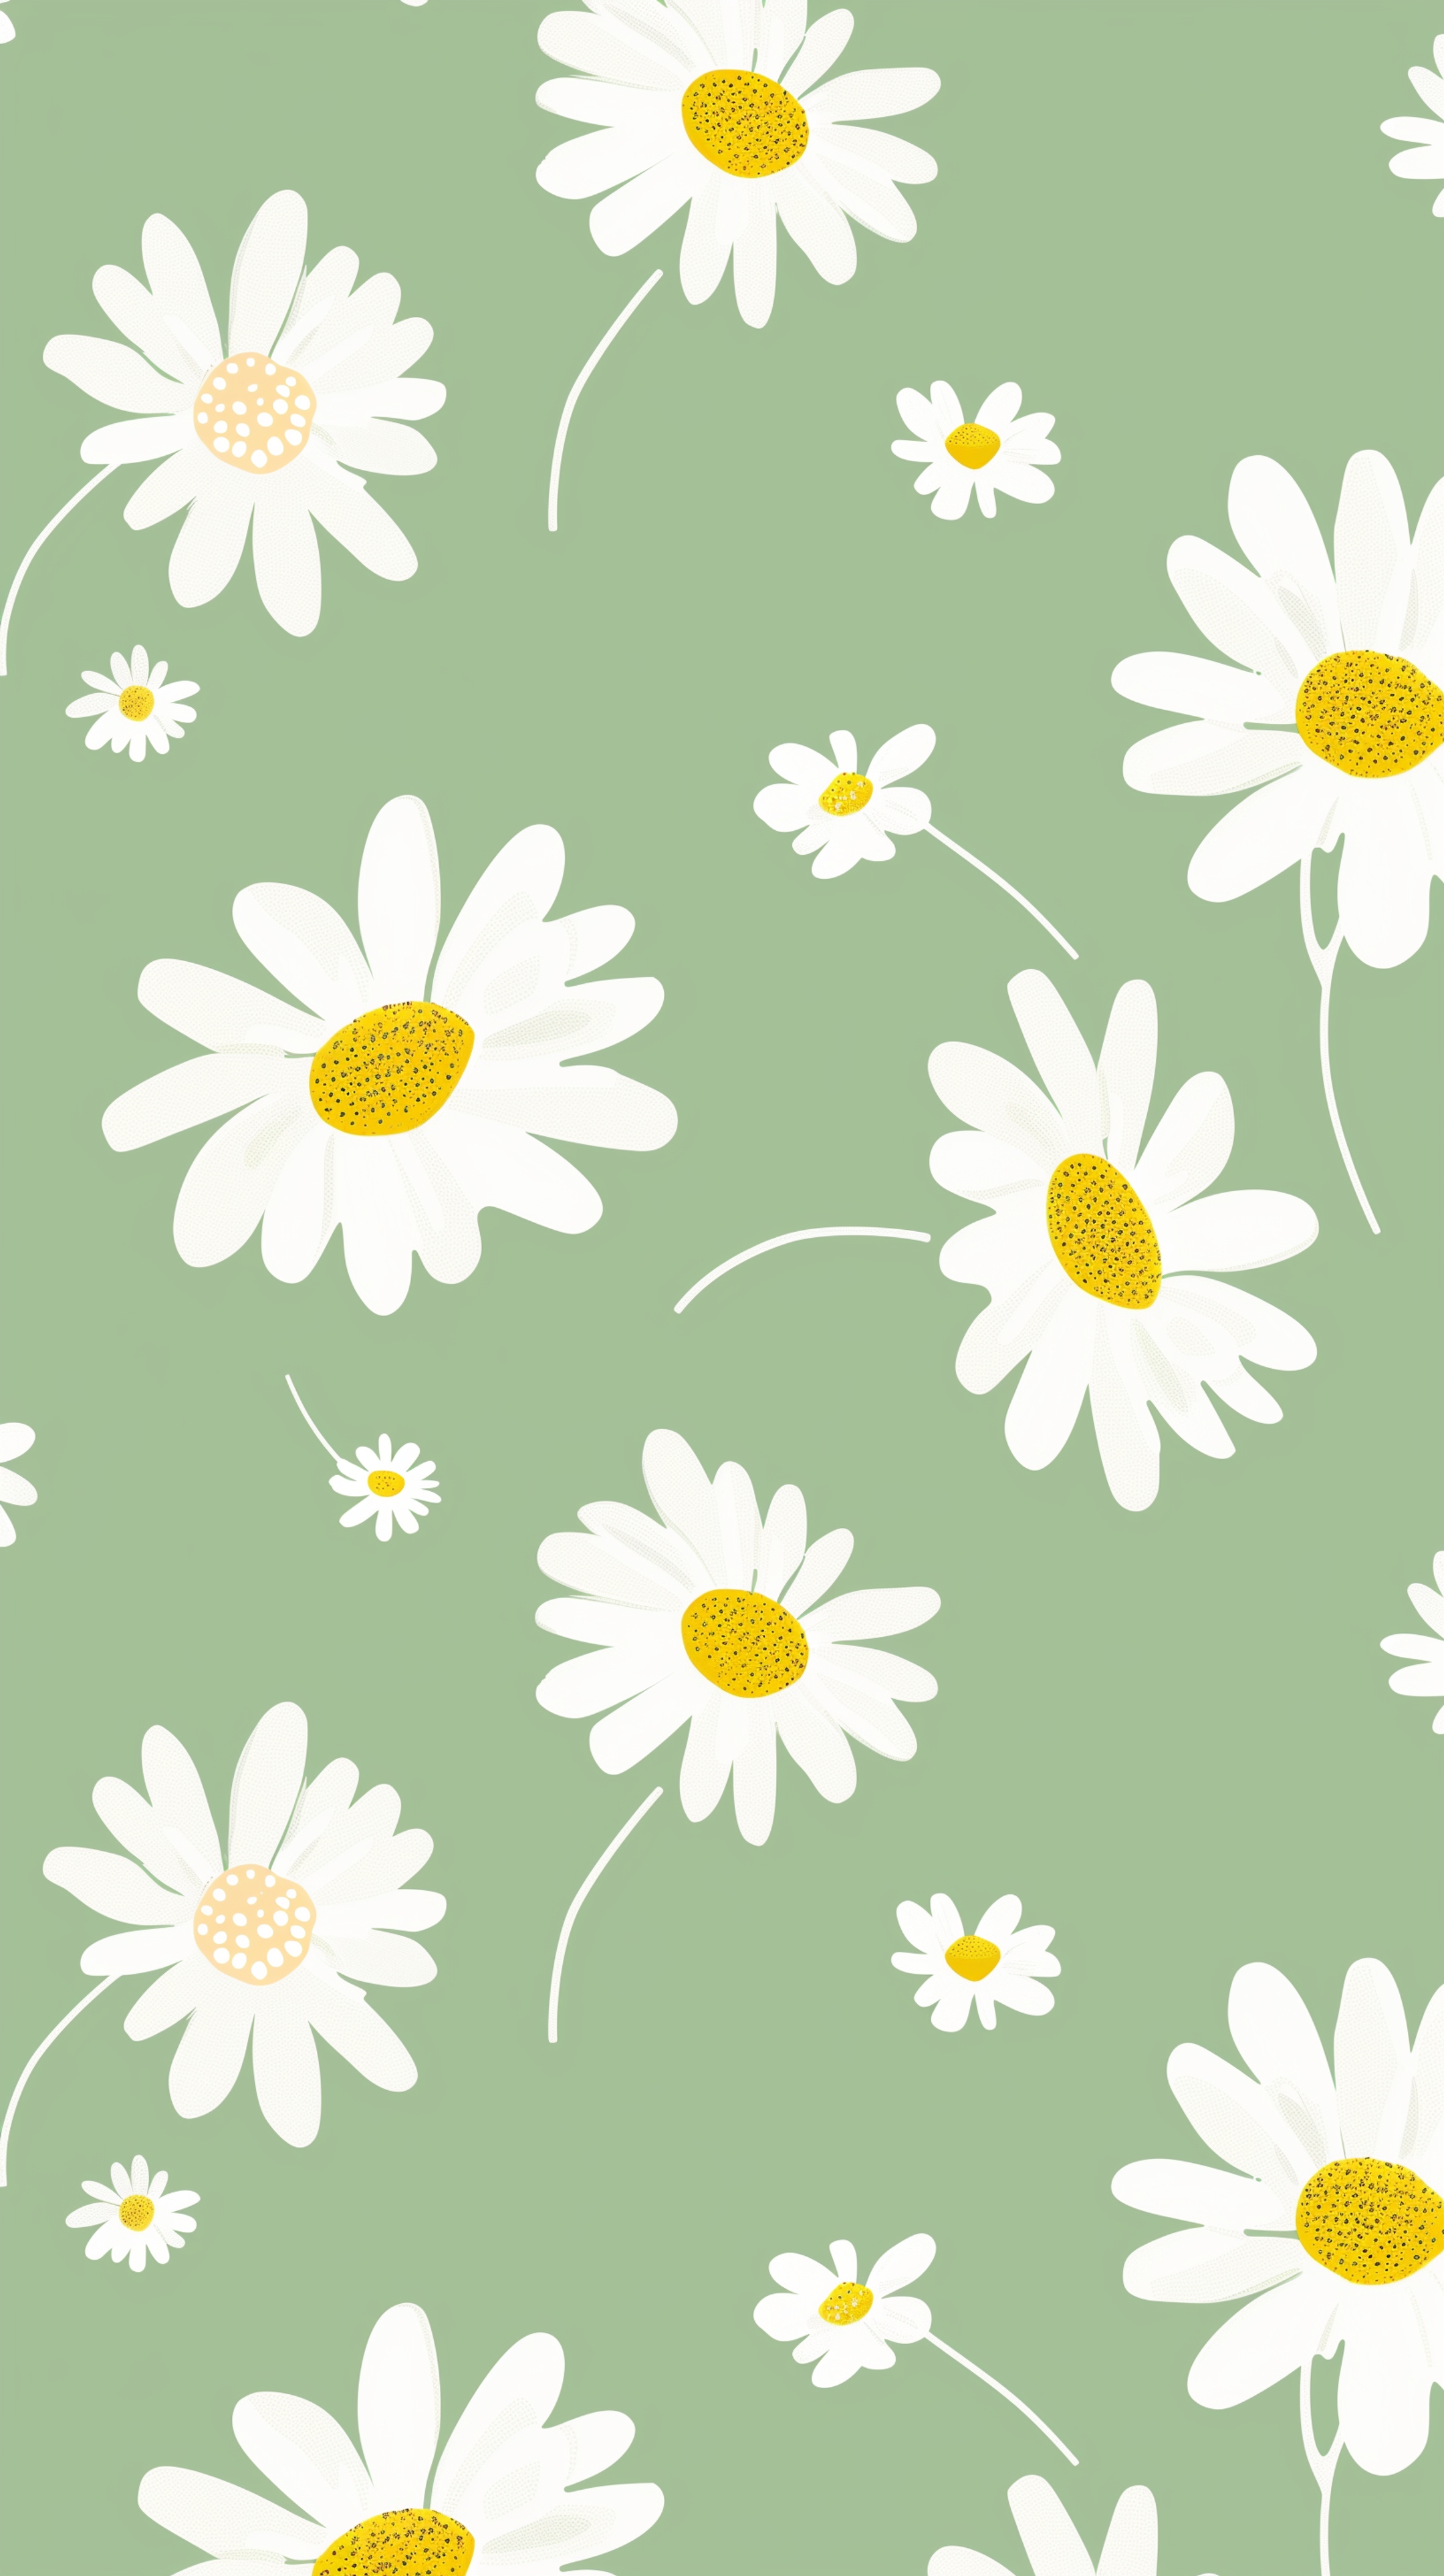 Cheerful Daisy Pattern for Kids Tapeta na zeď[cc2a0d8b223a410ca032]